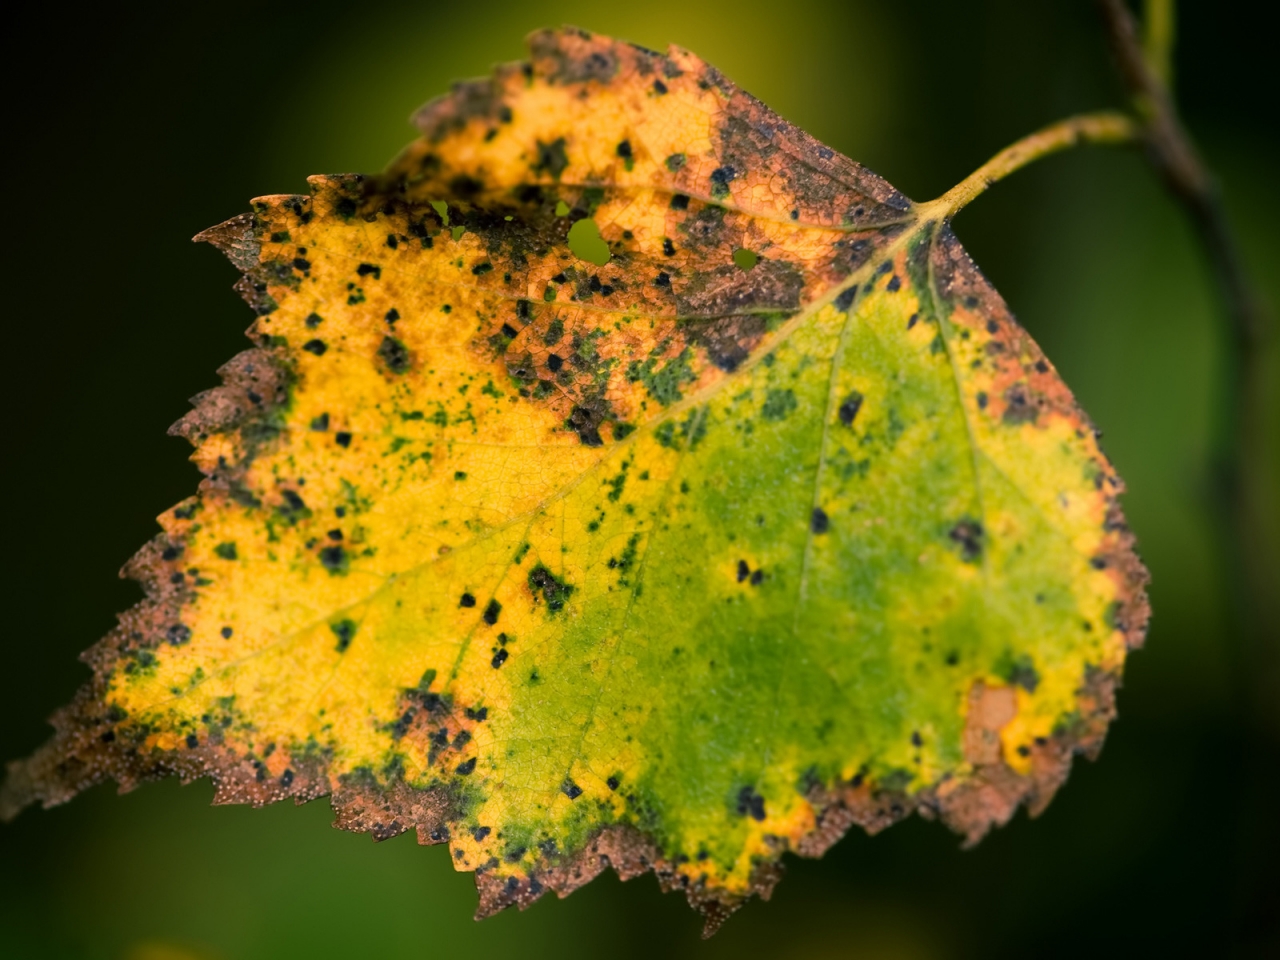 Dried Leaf for 1280 x 960 resolution